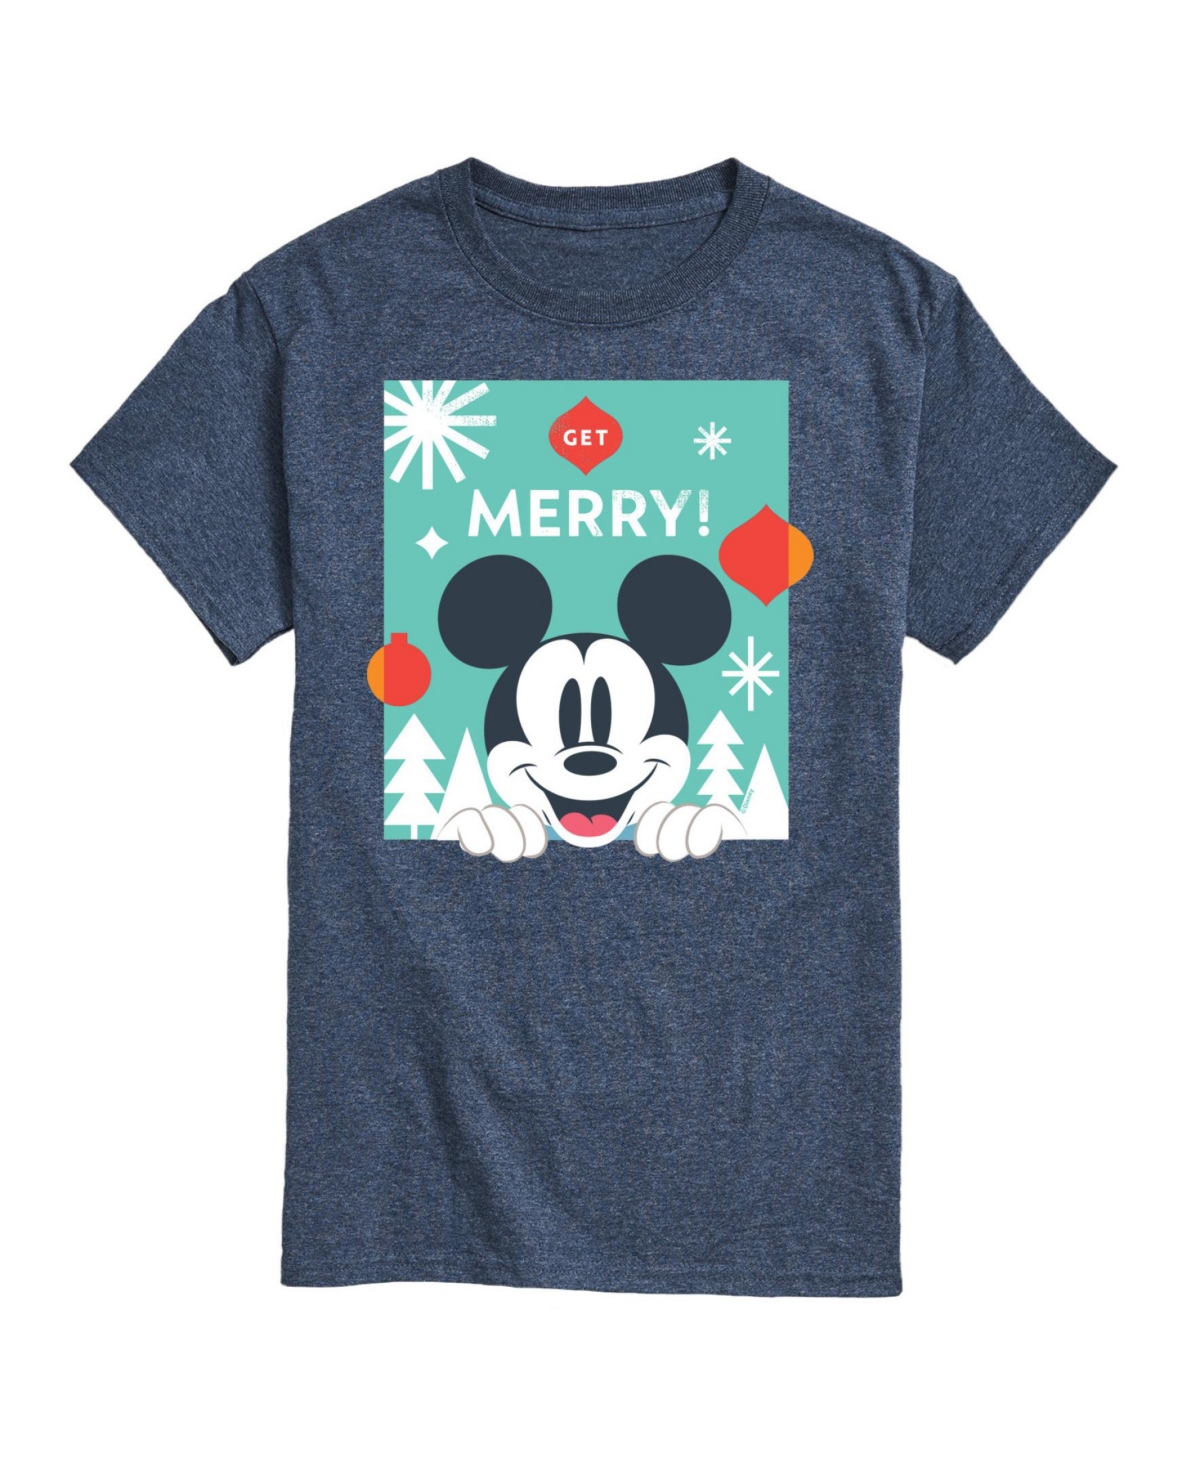 Airwaves Men's Disney Holiday Short Sleeves T-shirt In Heather Blue